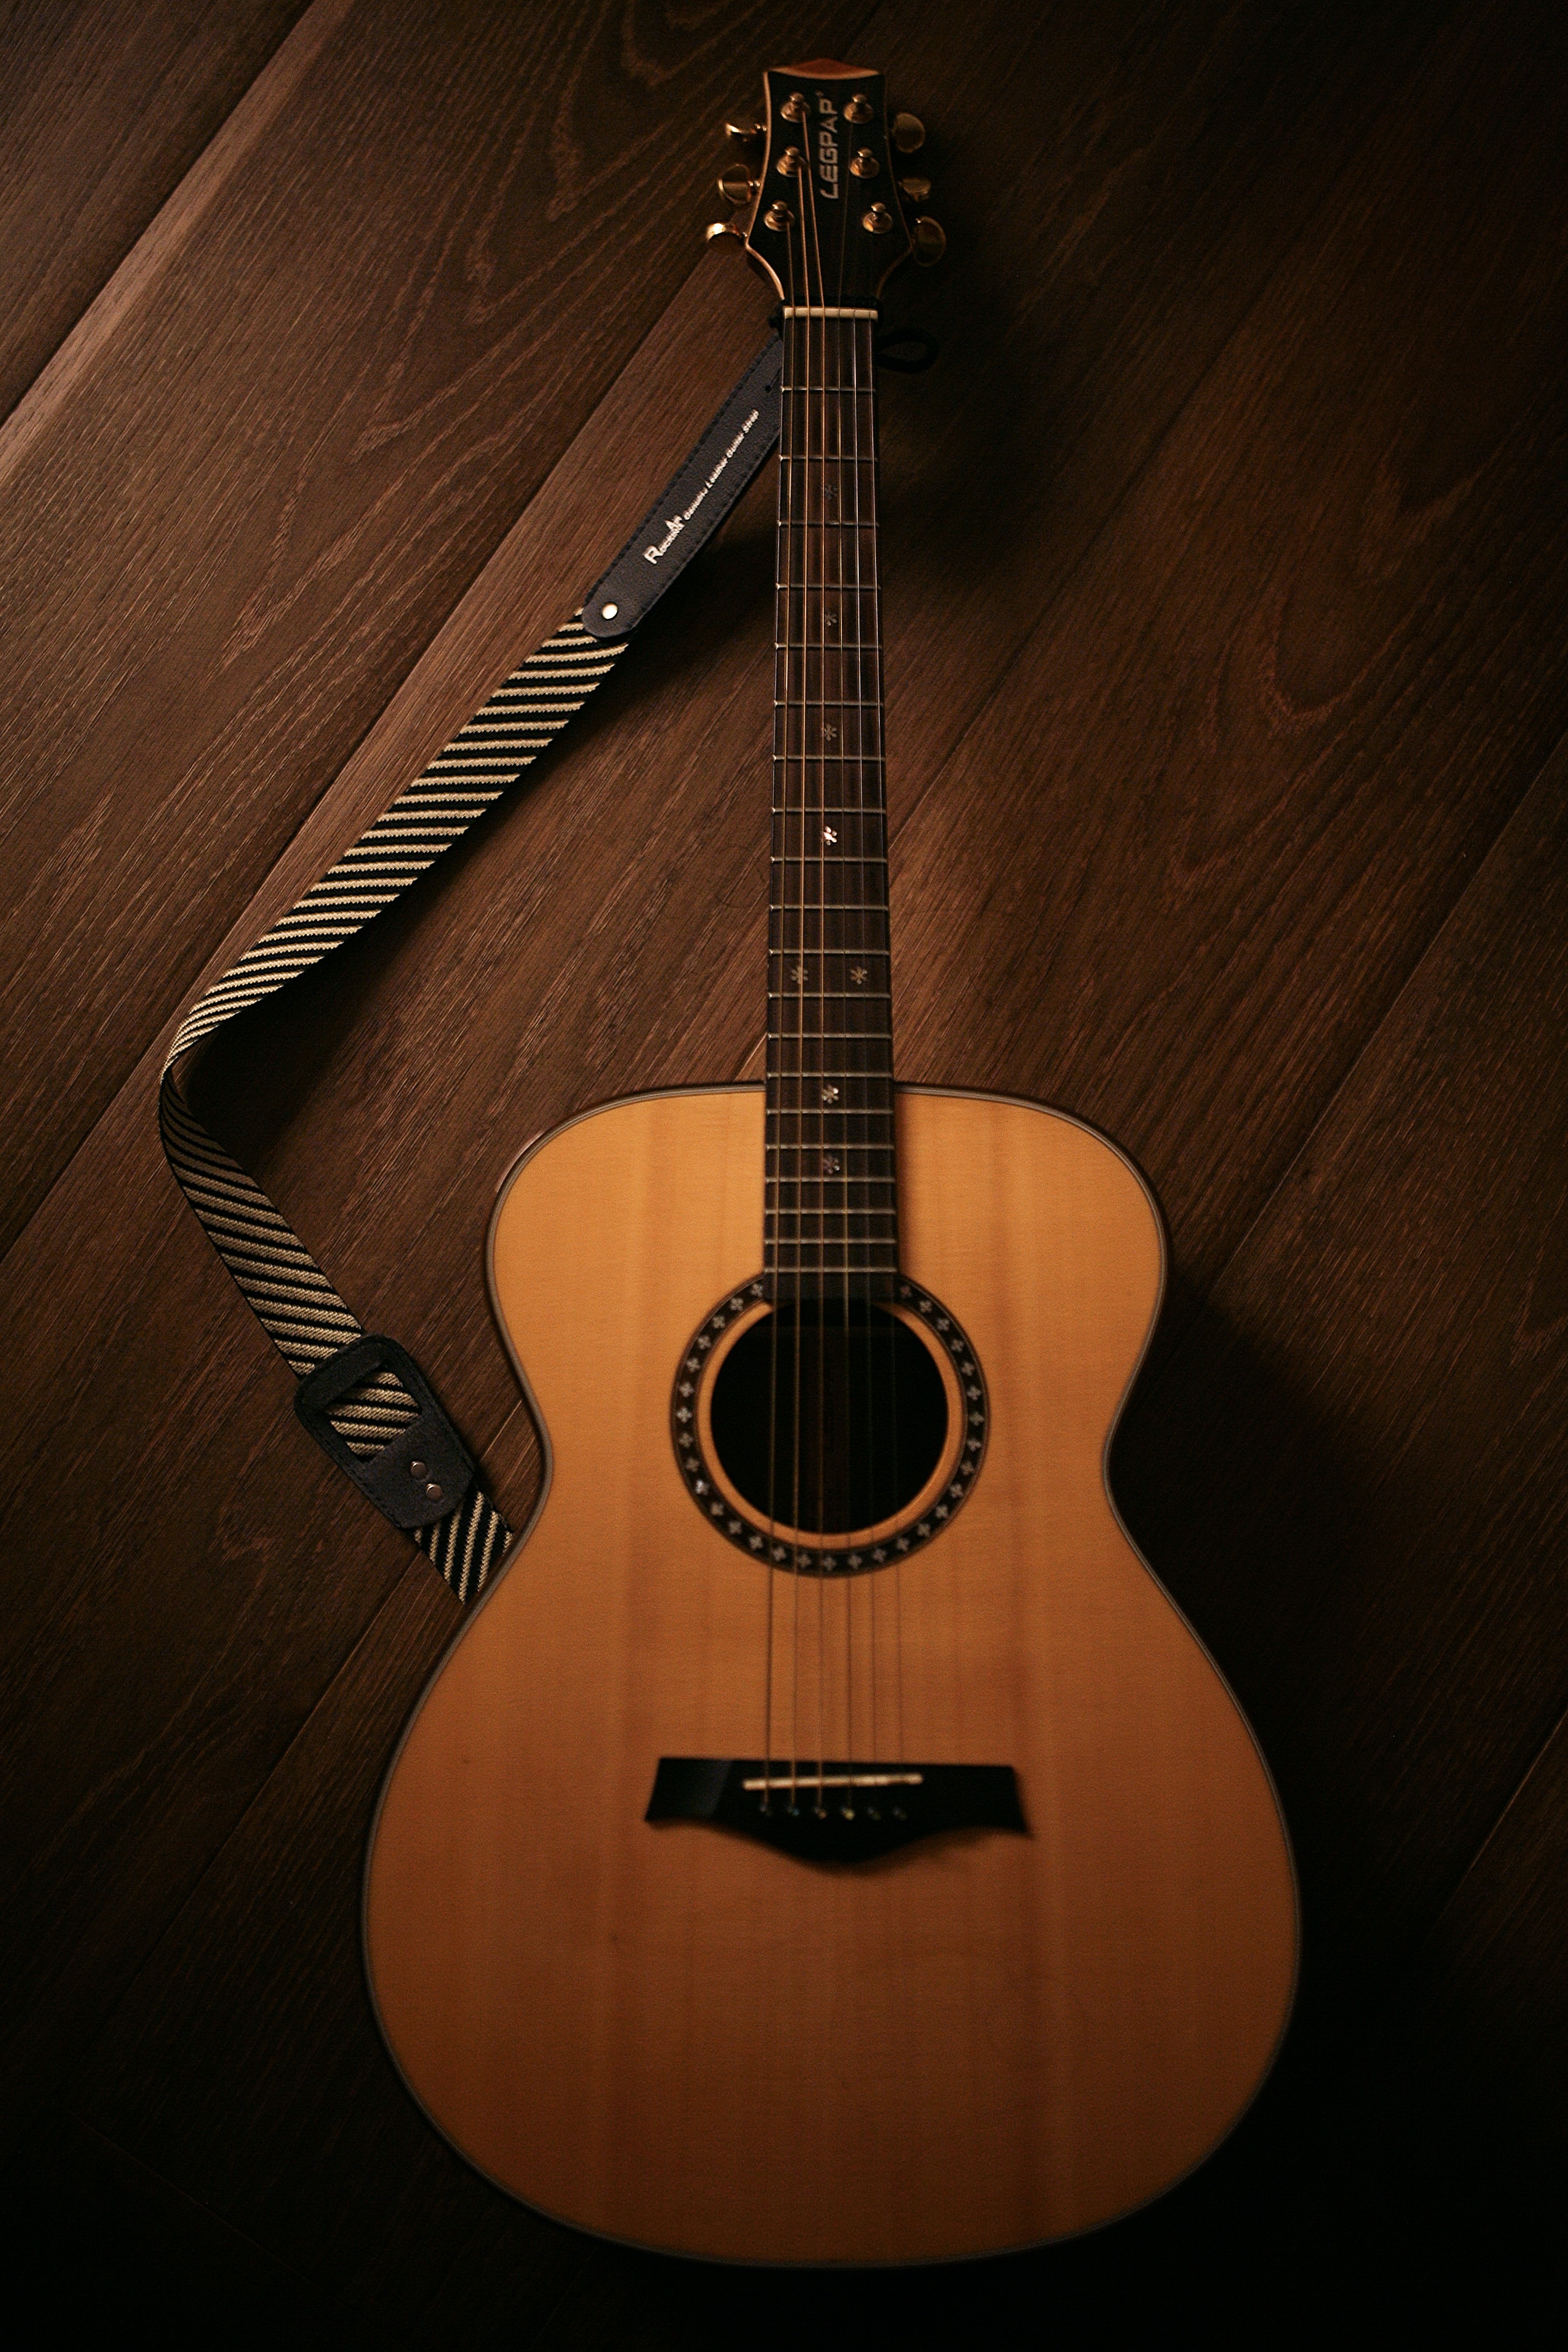 guitar, acoustic guitar, musical instrument, music, brown images